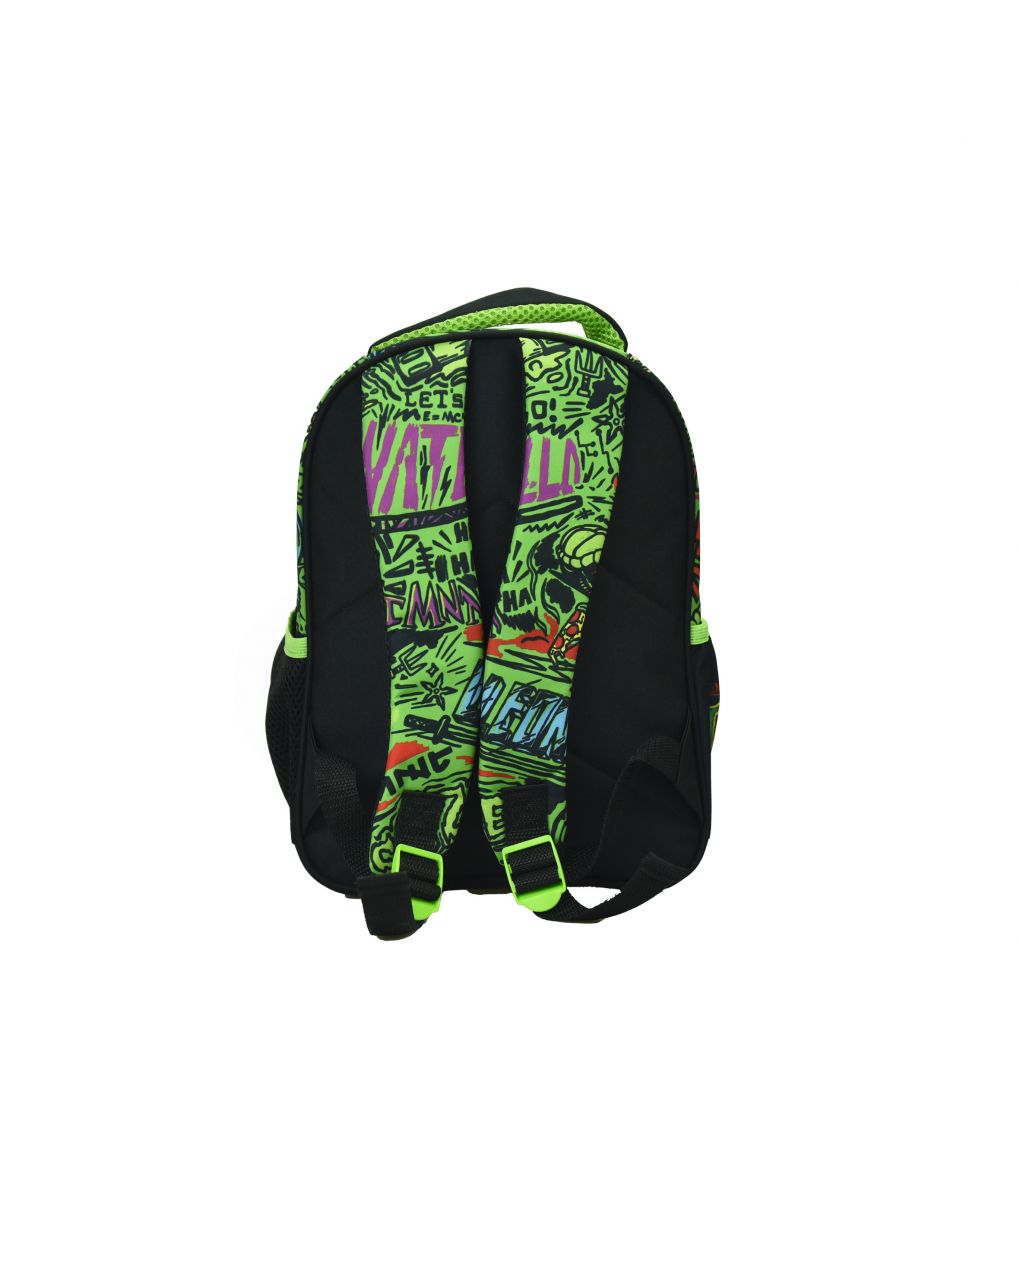 Gim τσάντα νηπιαγωγείου πλάτης ninja turtles 334-26054 - Gim